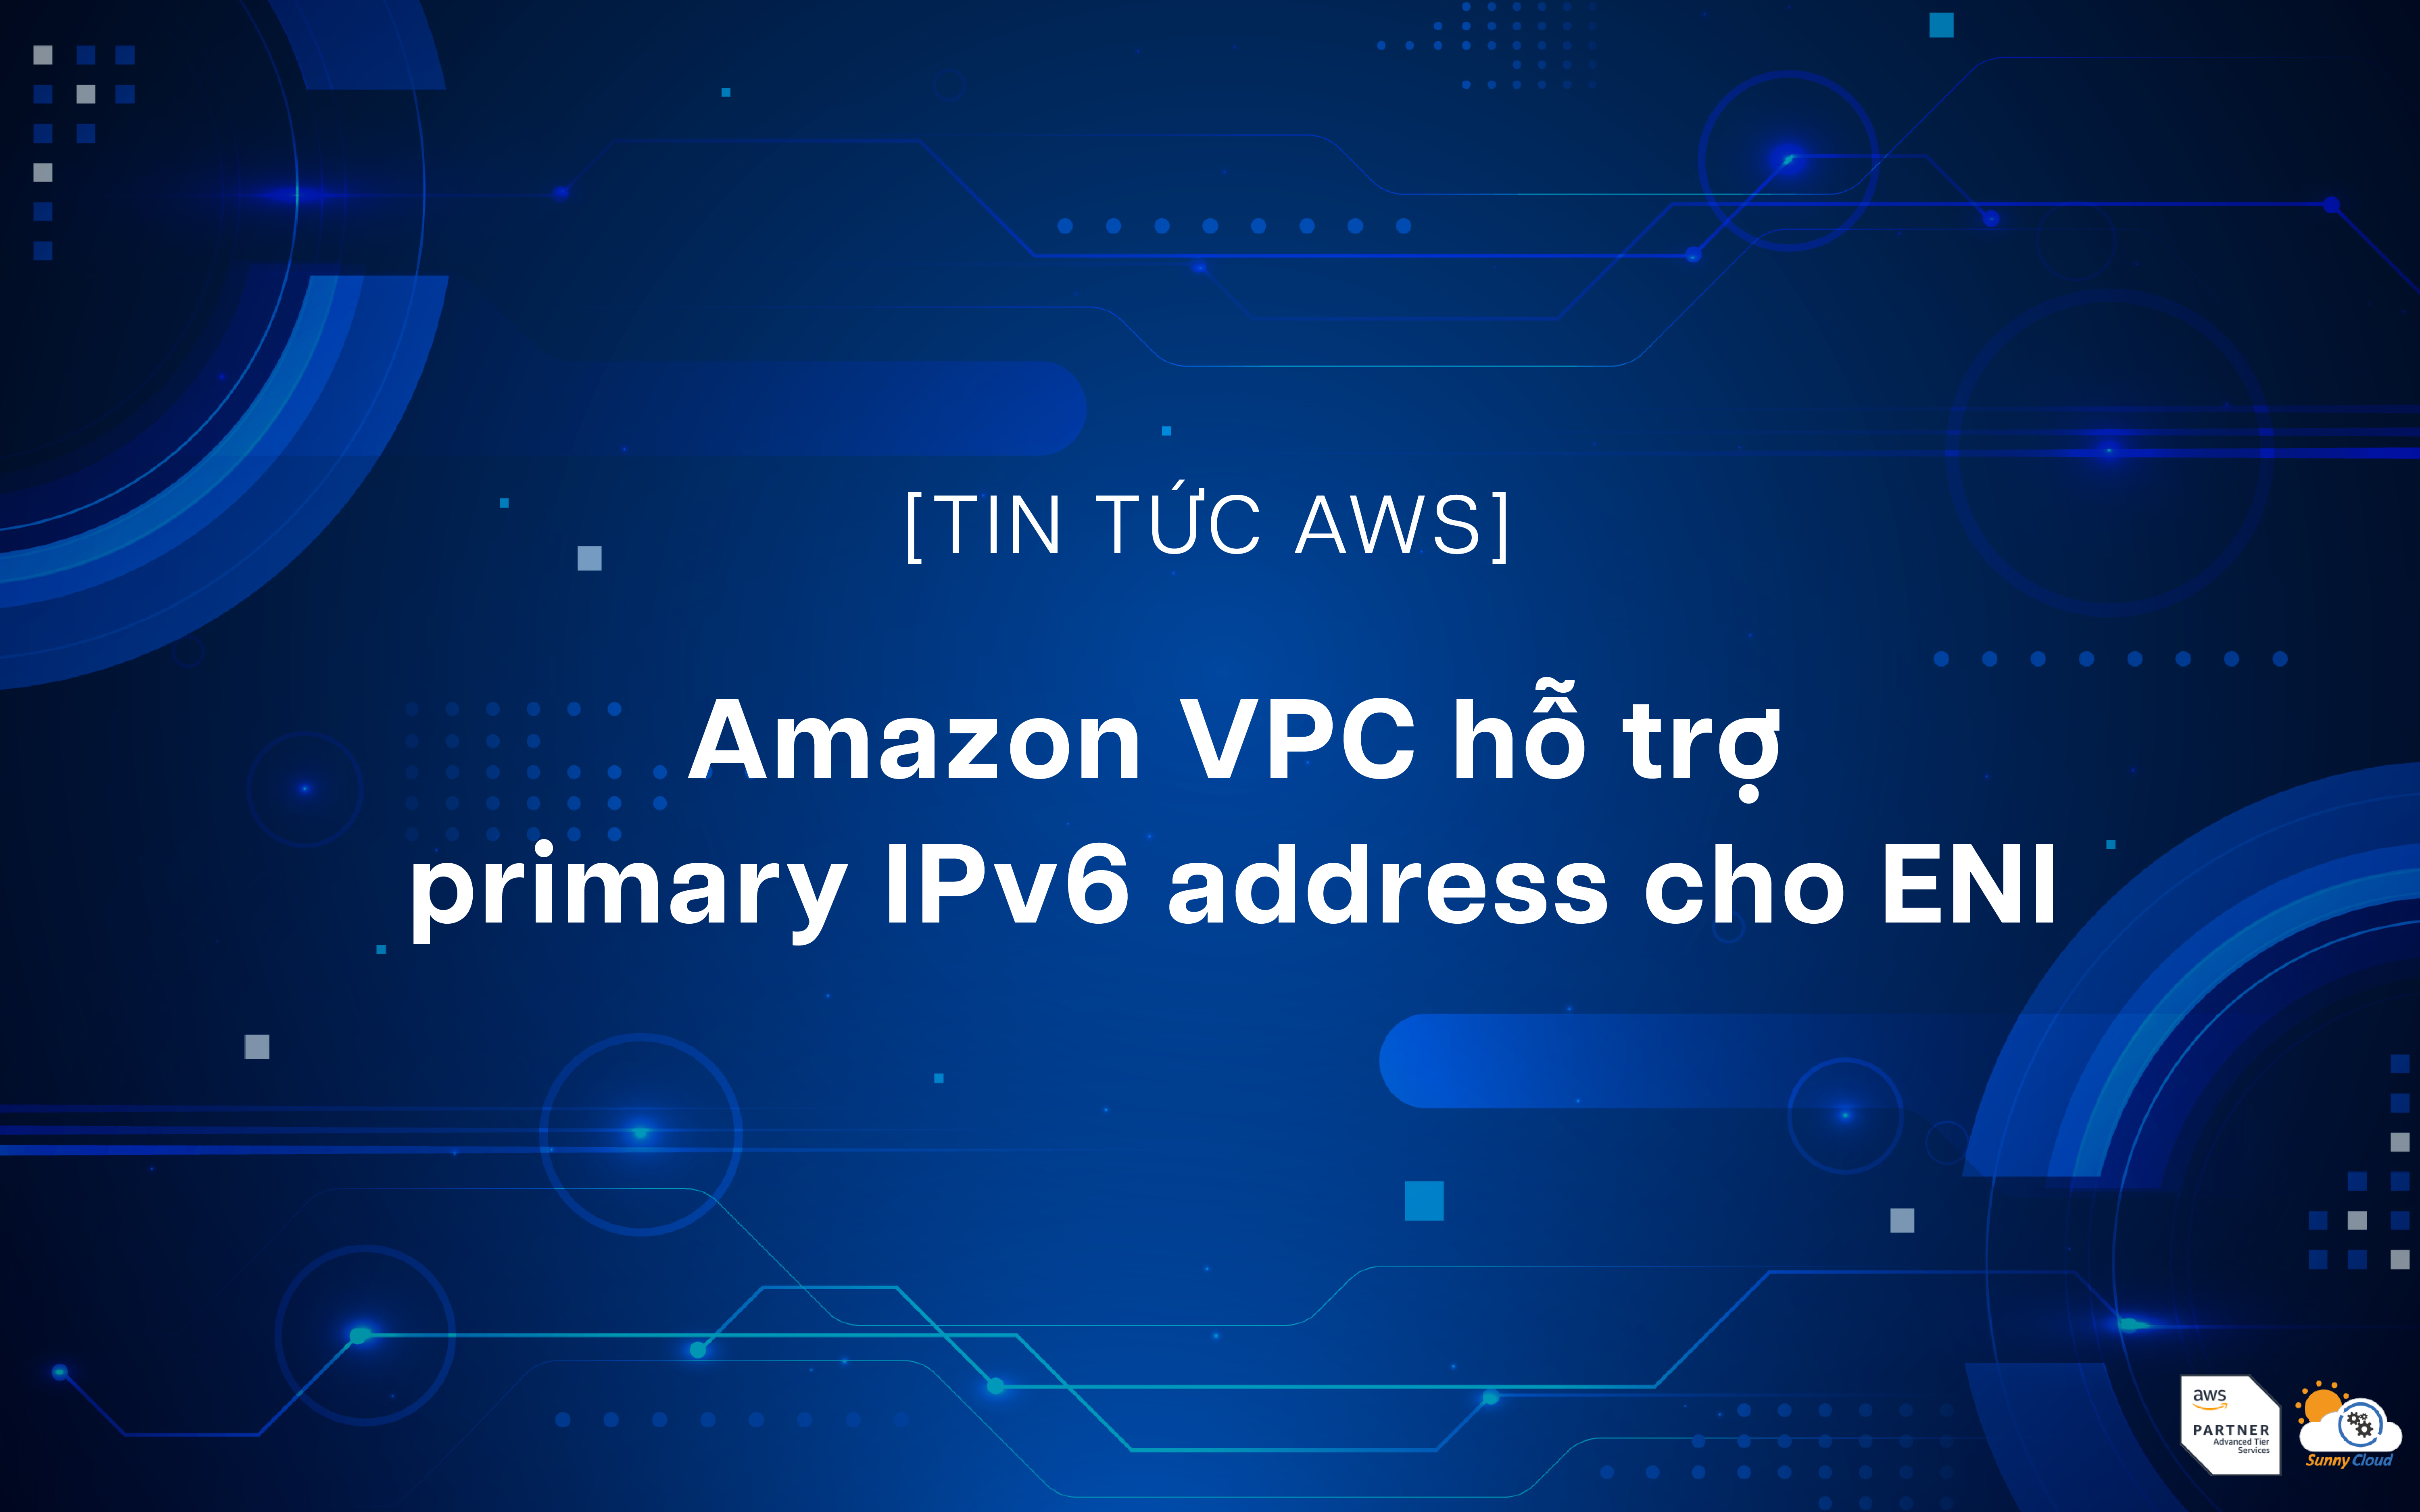 Amazon VPC hỗ trợ primary IPv6 address cho ENI